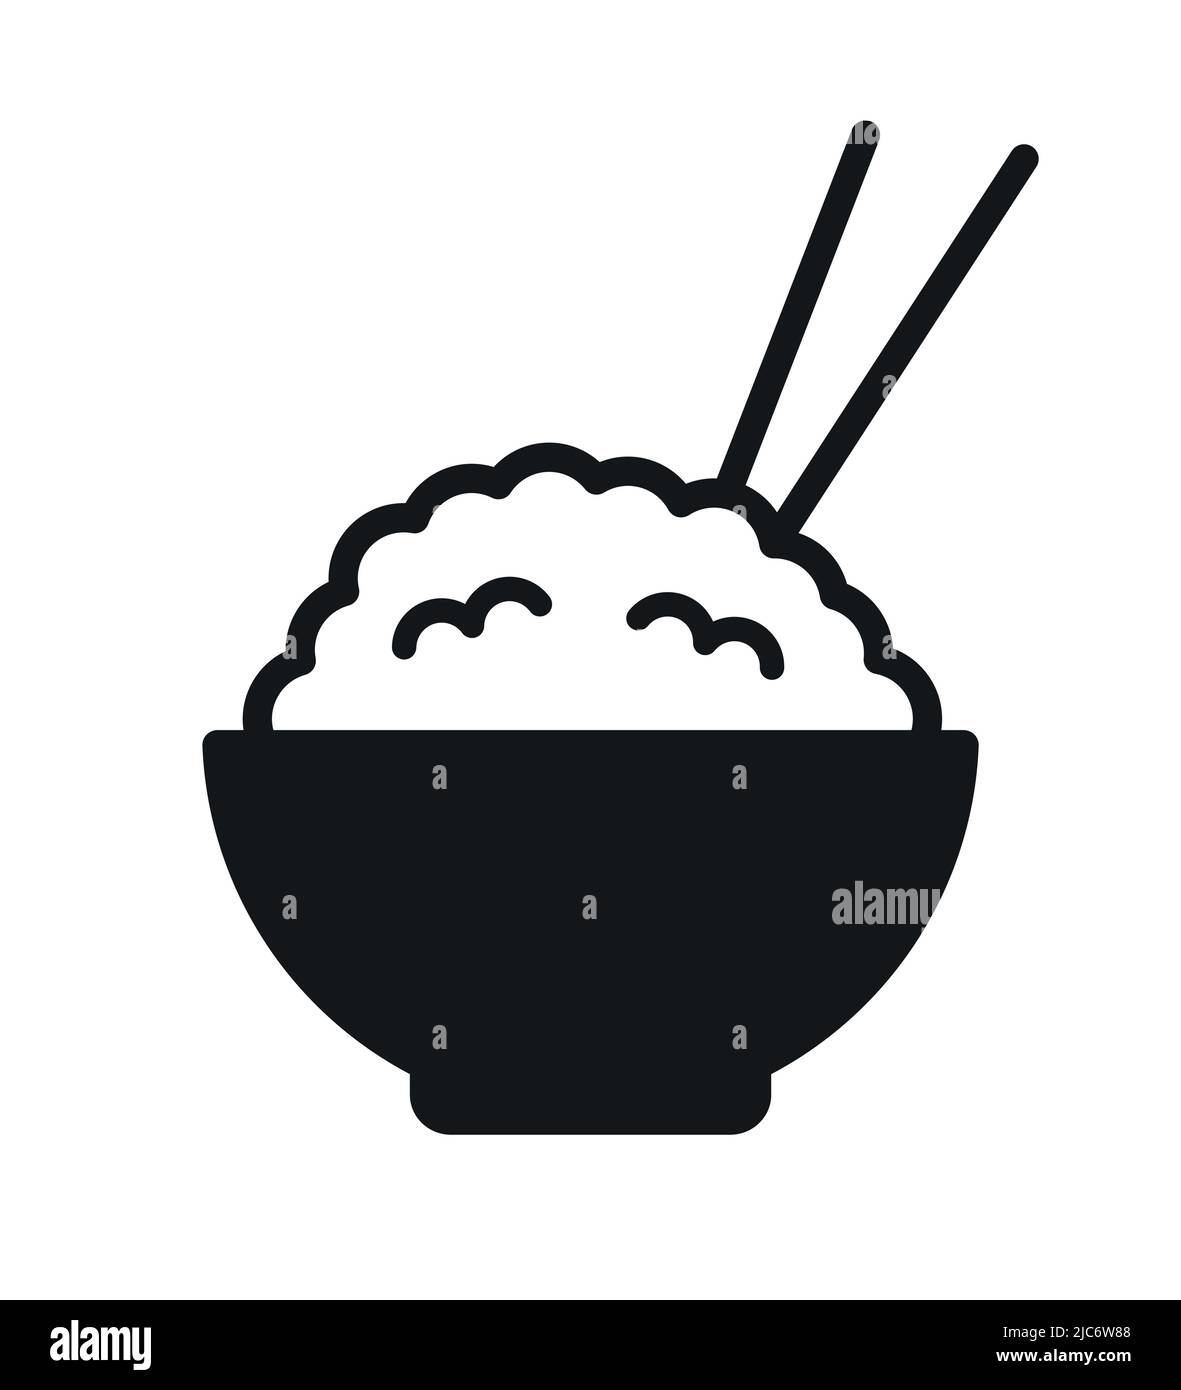 Full rice bowl with sticks asian food restaurant symbol vector illustration icon Stock Vector